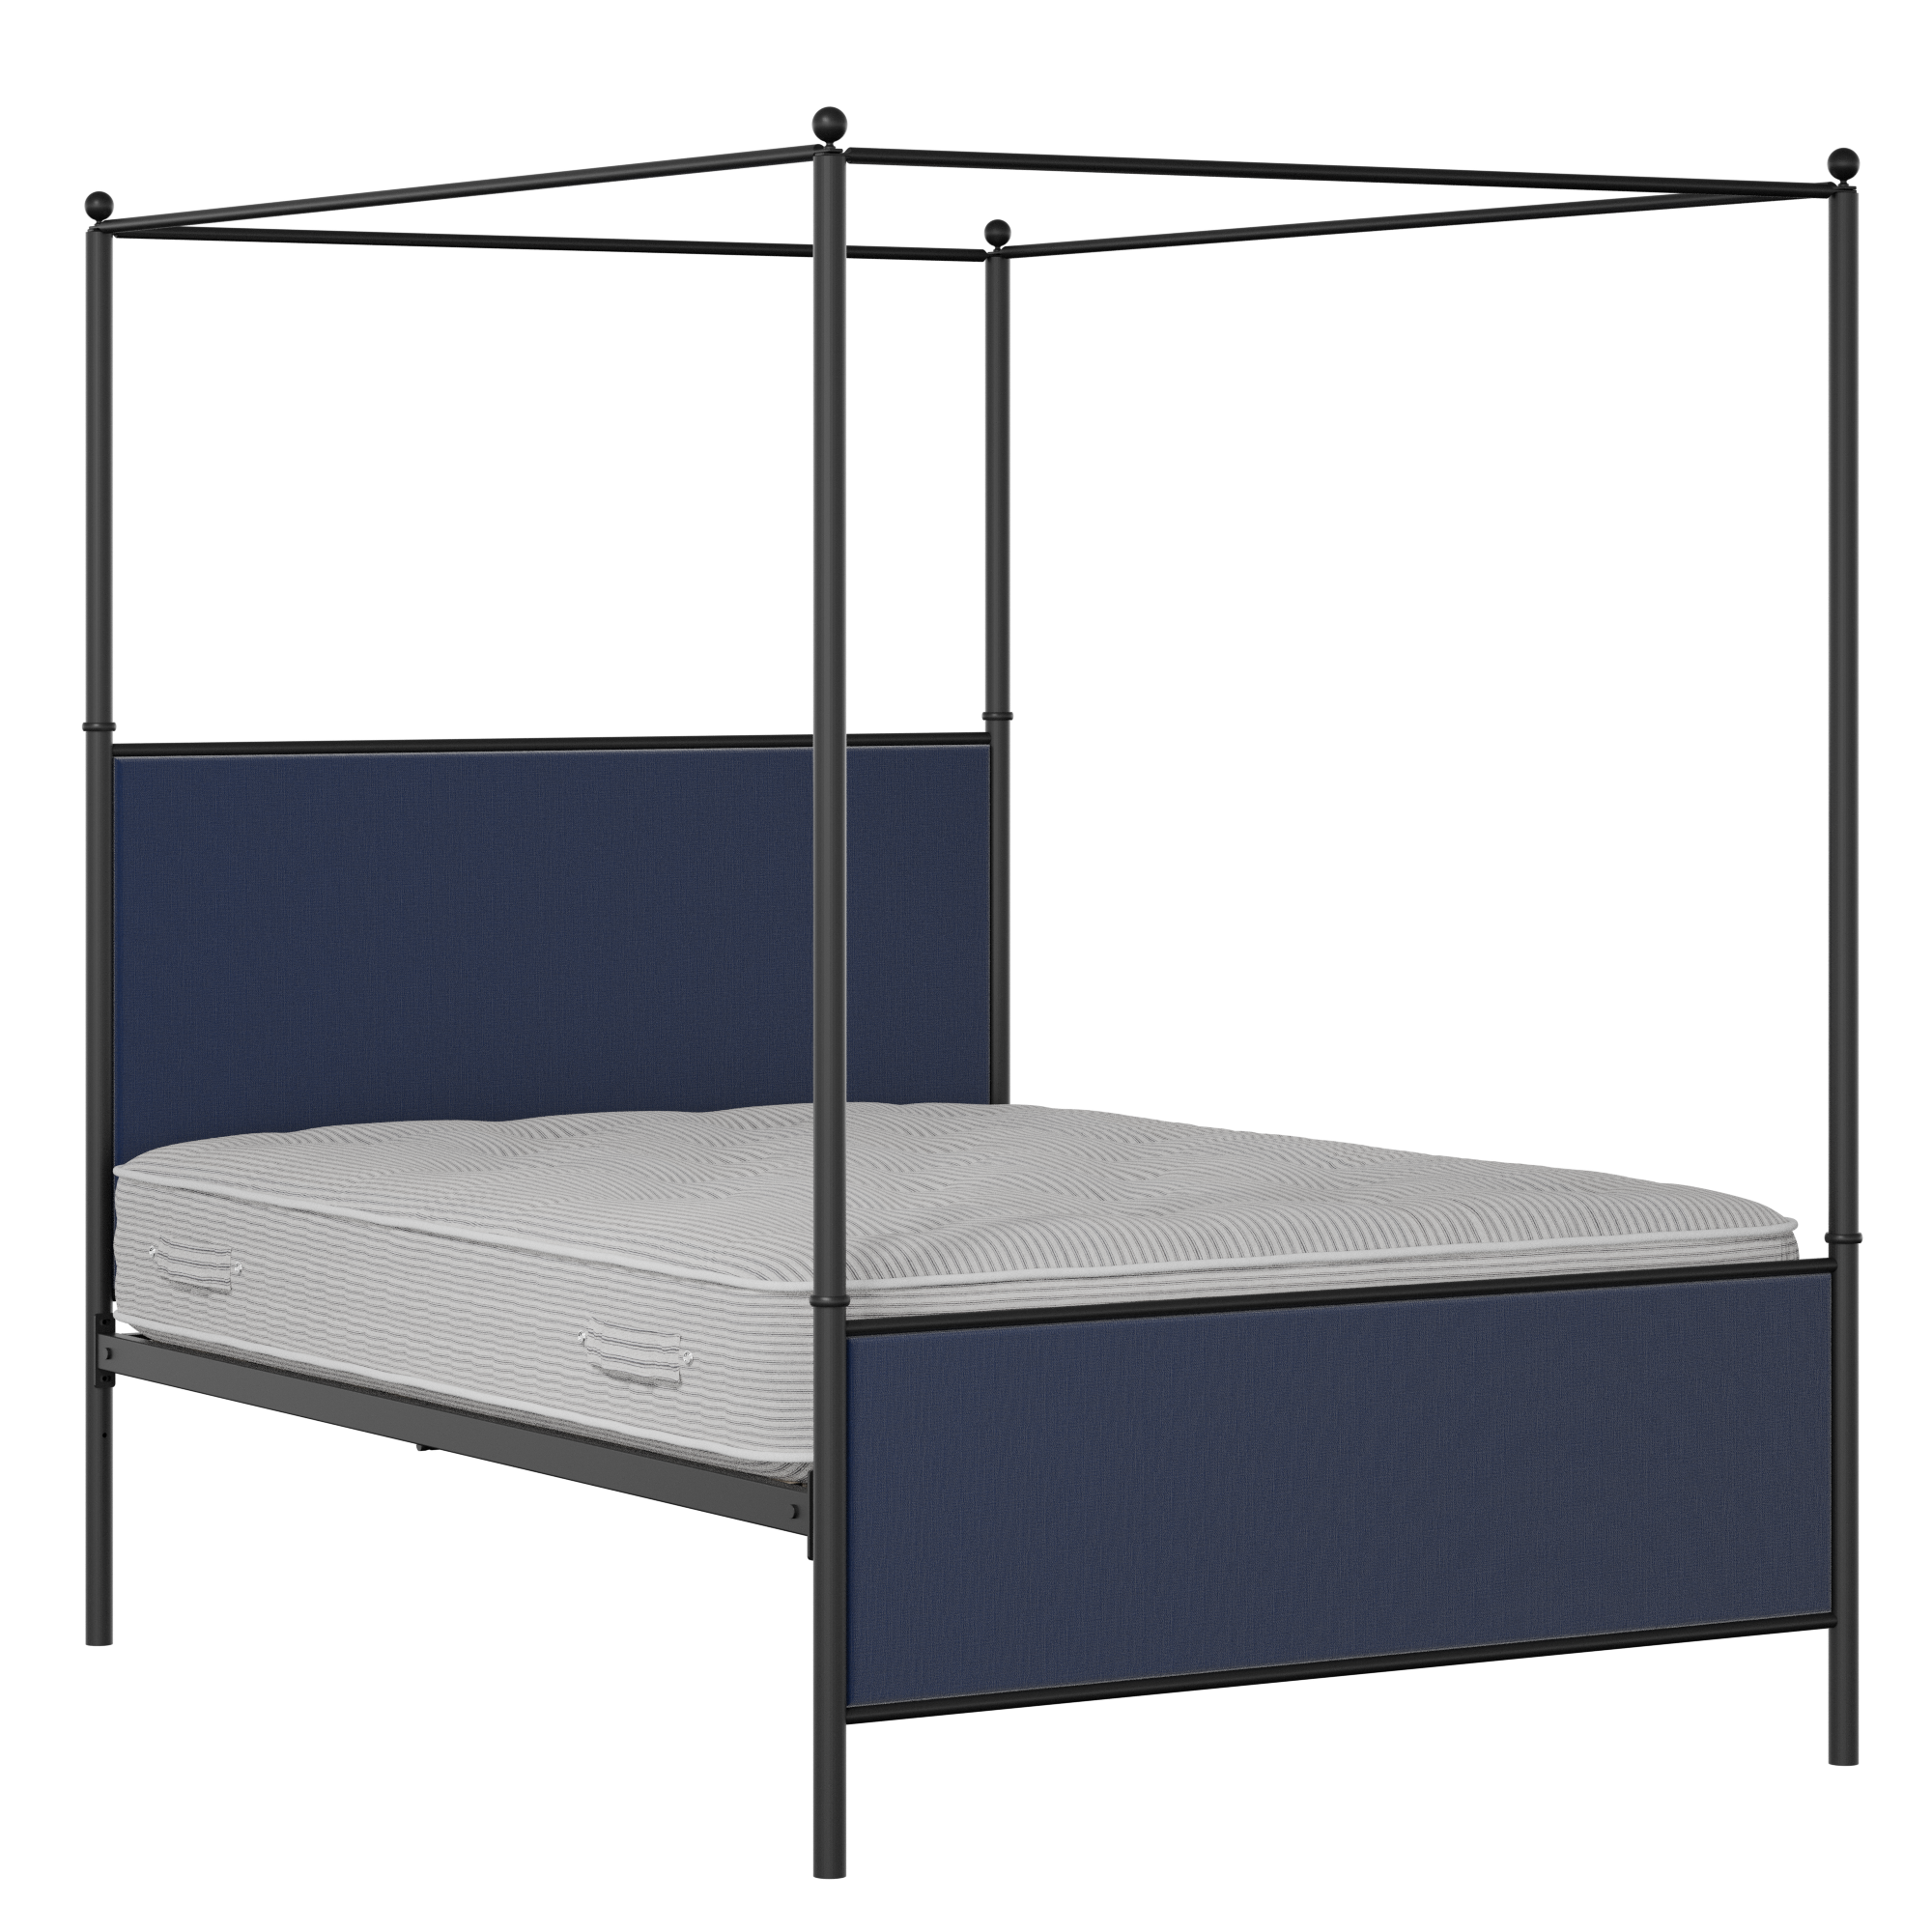 Reims cama de metal en negro con tela azul